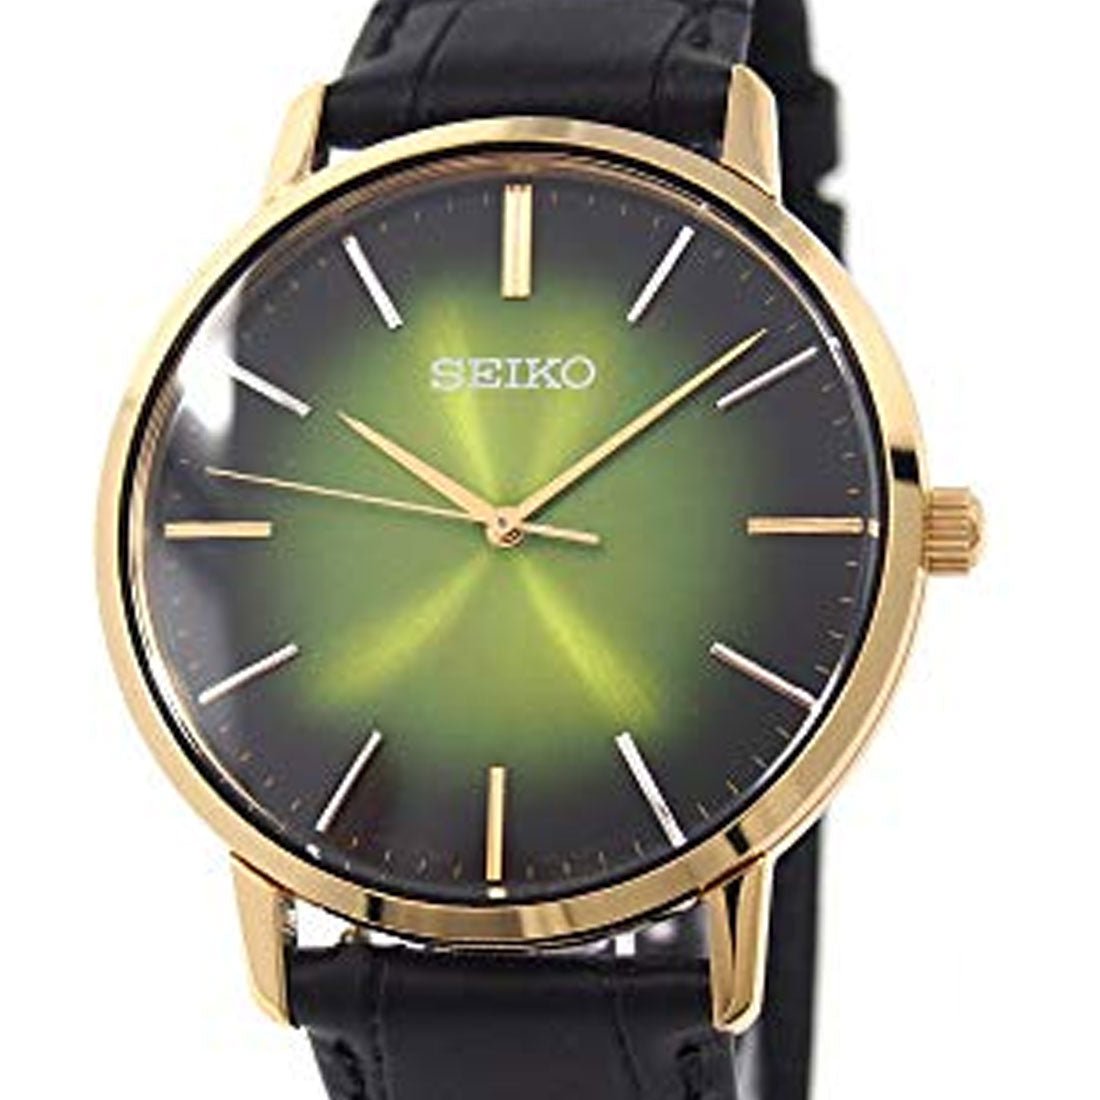 Seiko Selection Leather JDM Watch SCXP126 -Seiko